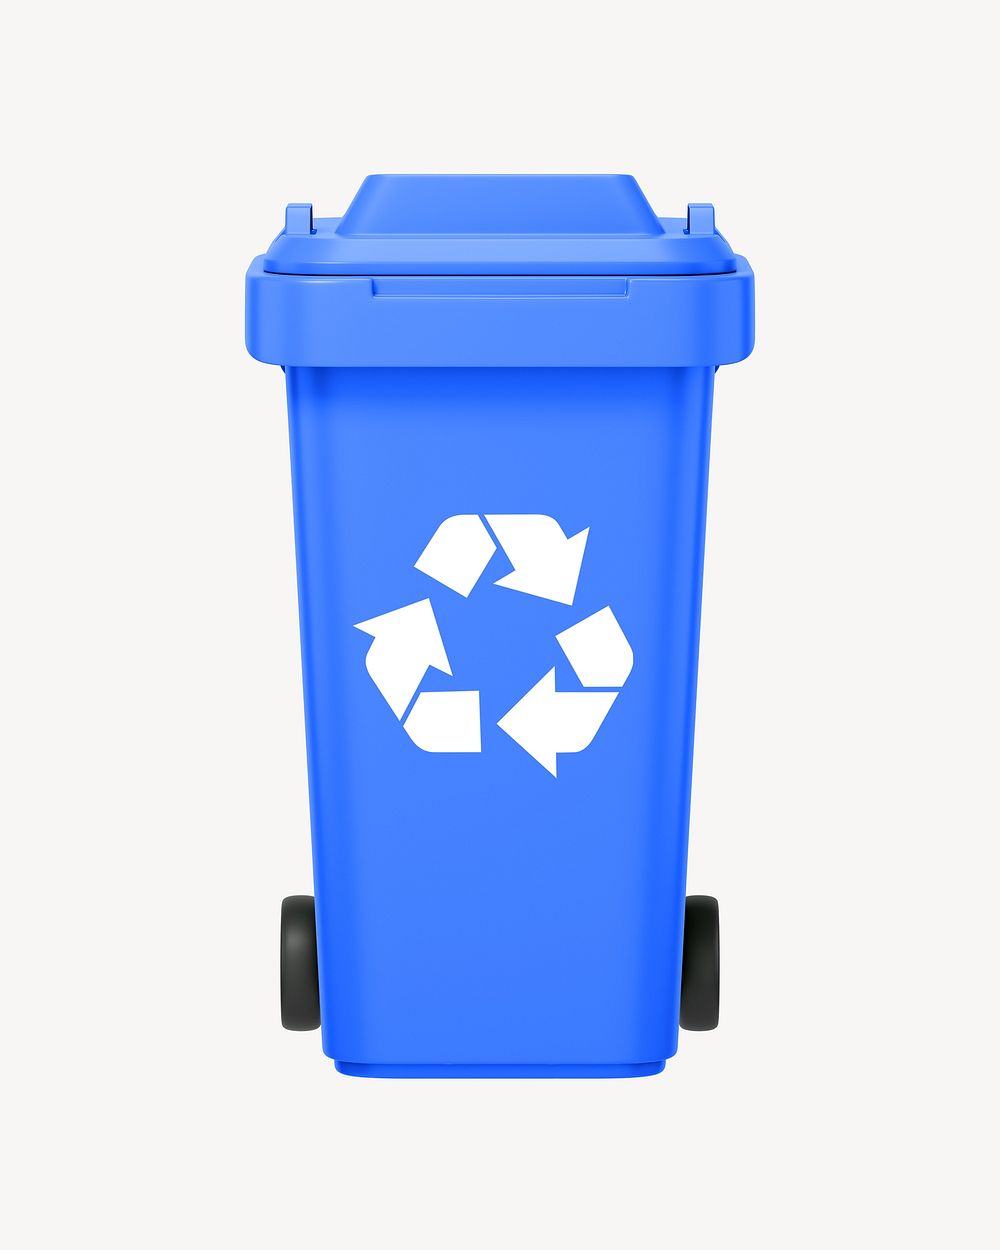 3D recycling bin, element illustration